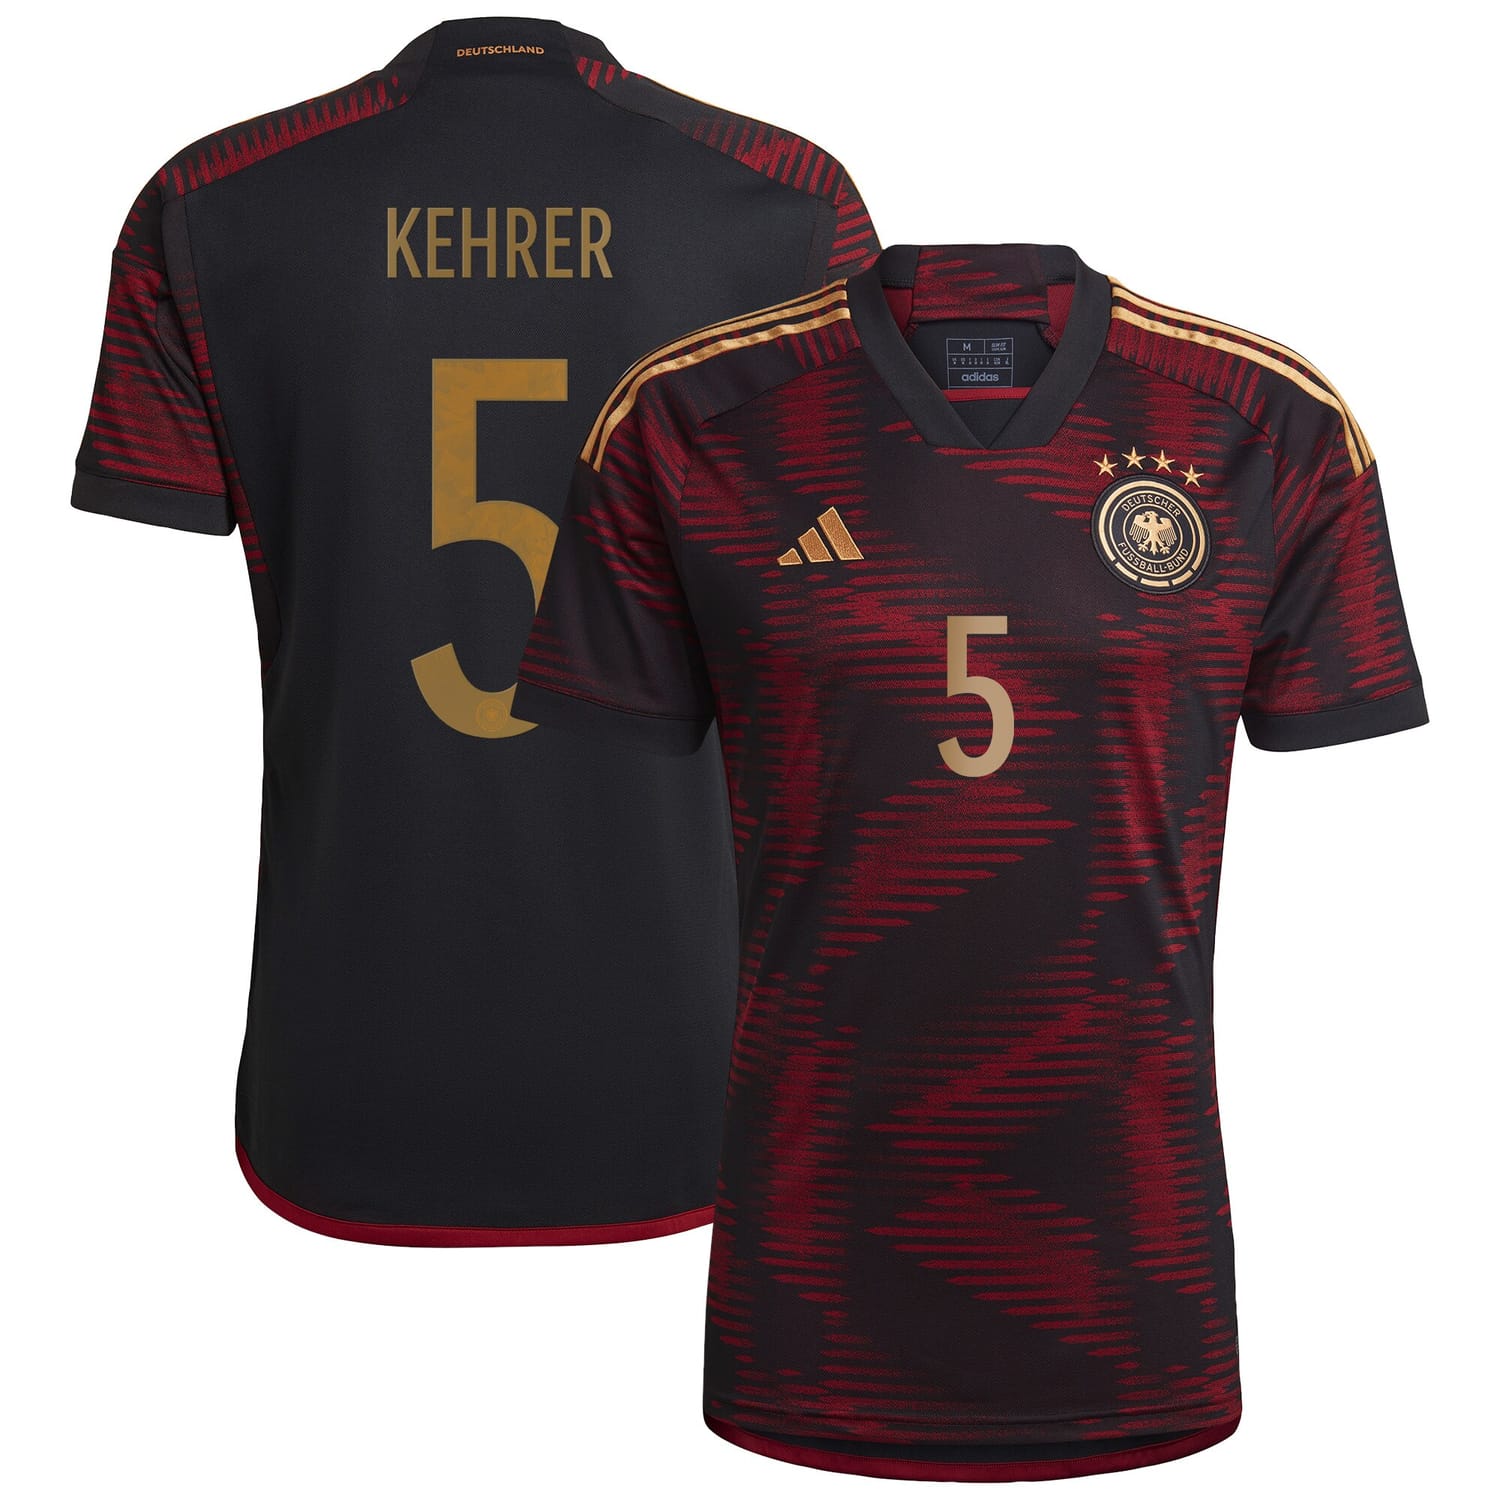 Germany National Team Away Jersey Shirt player Kehrer 5 printing for Men